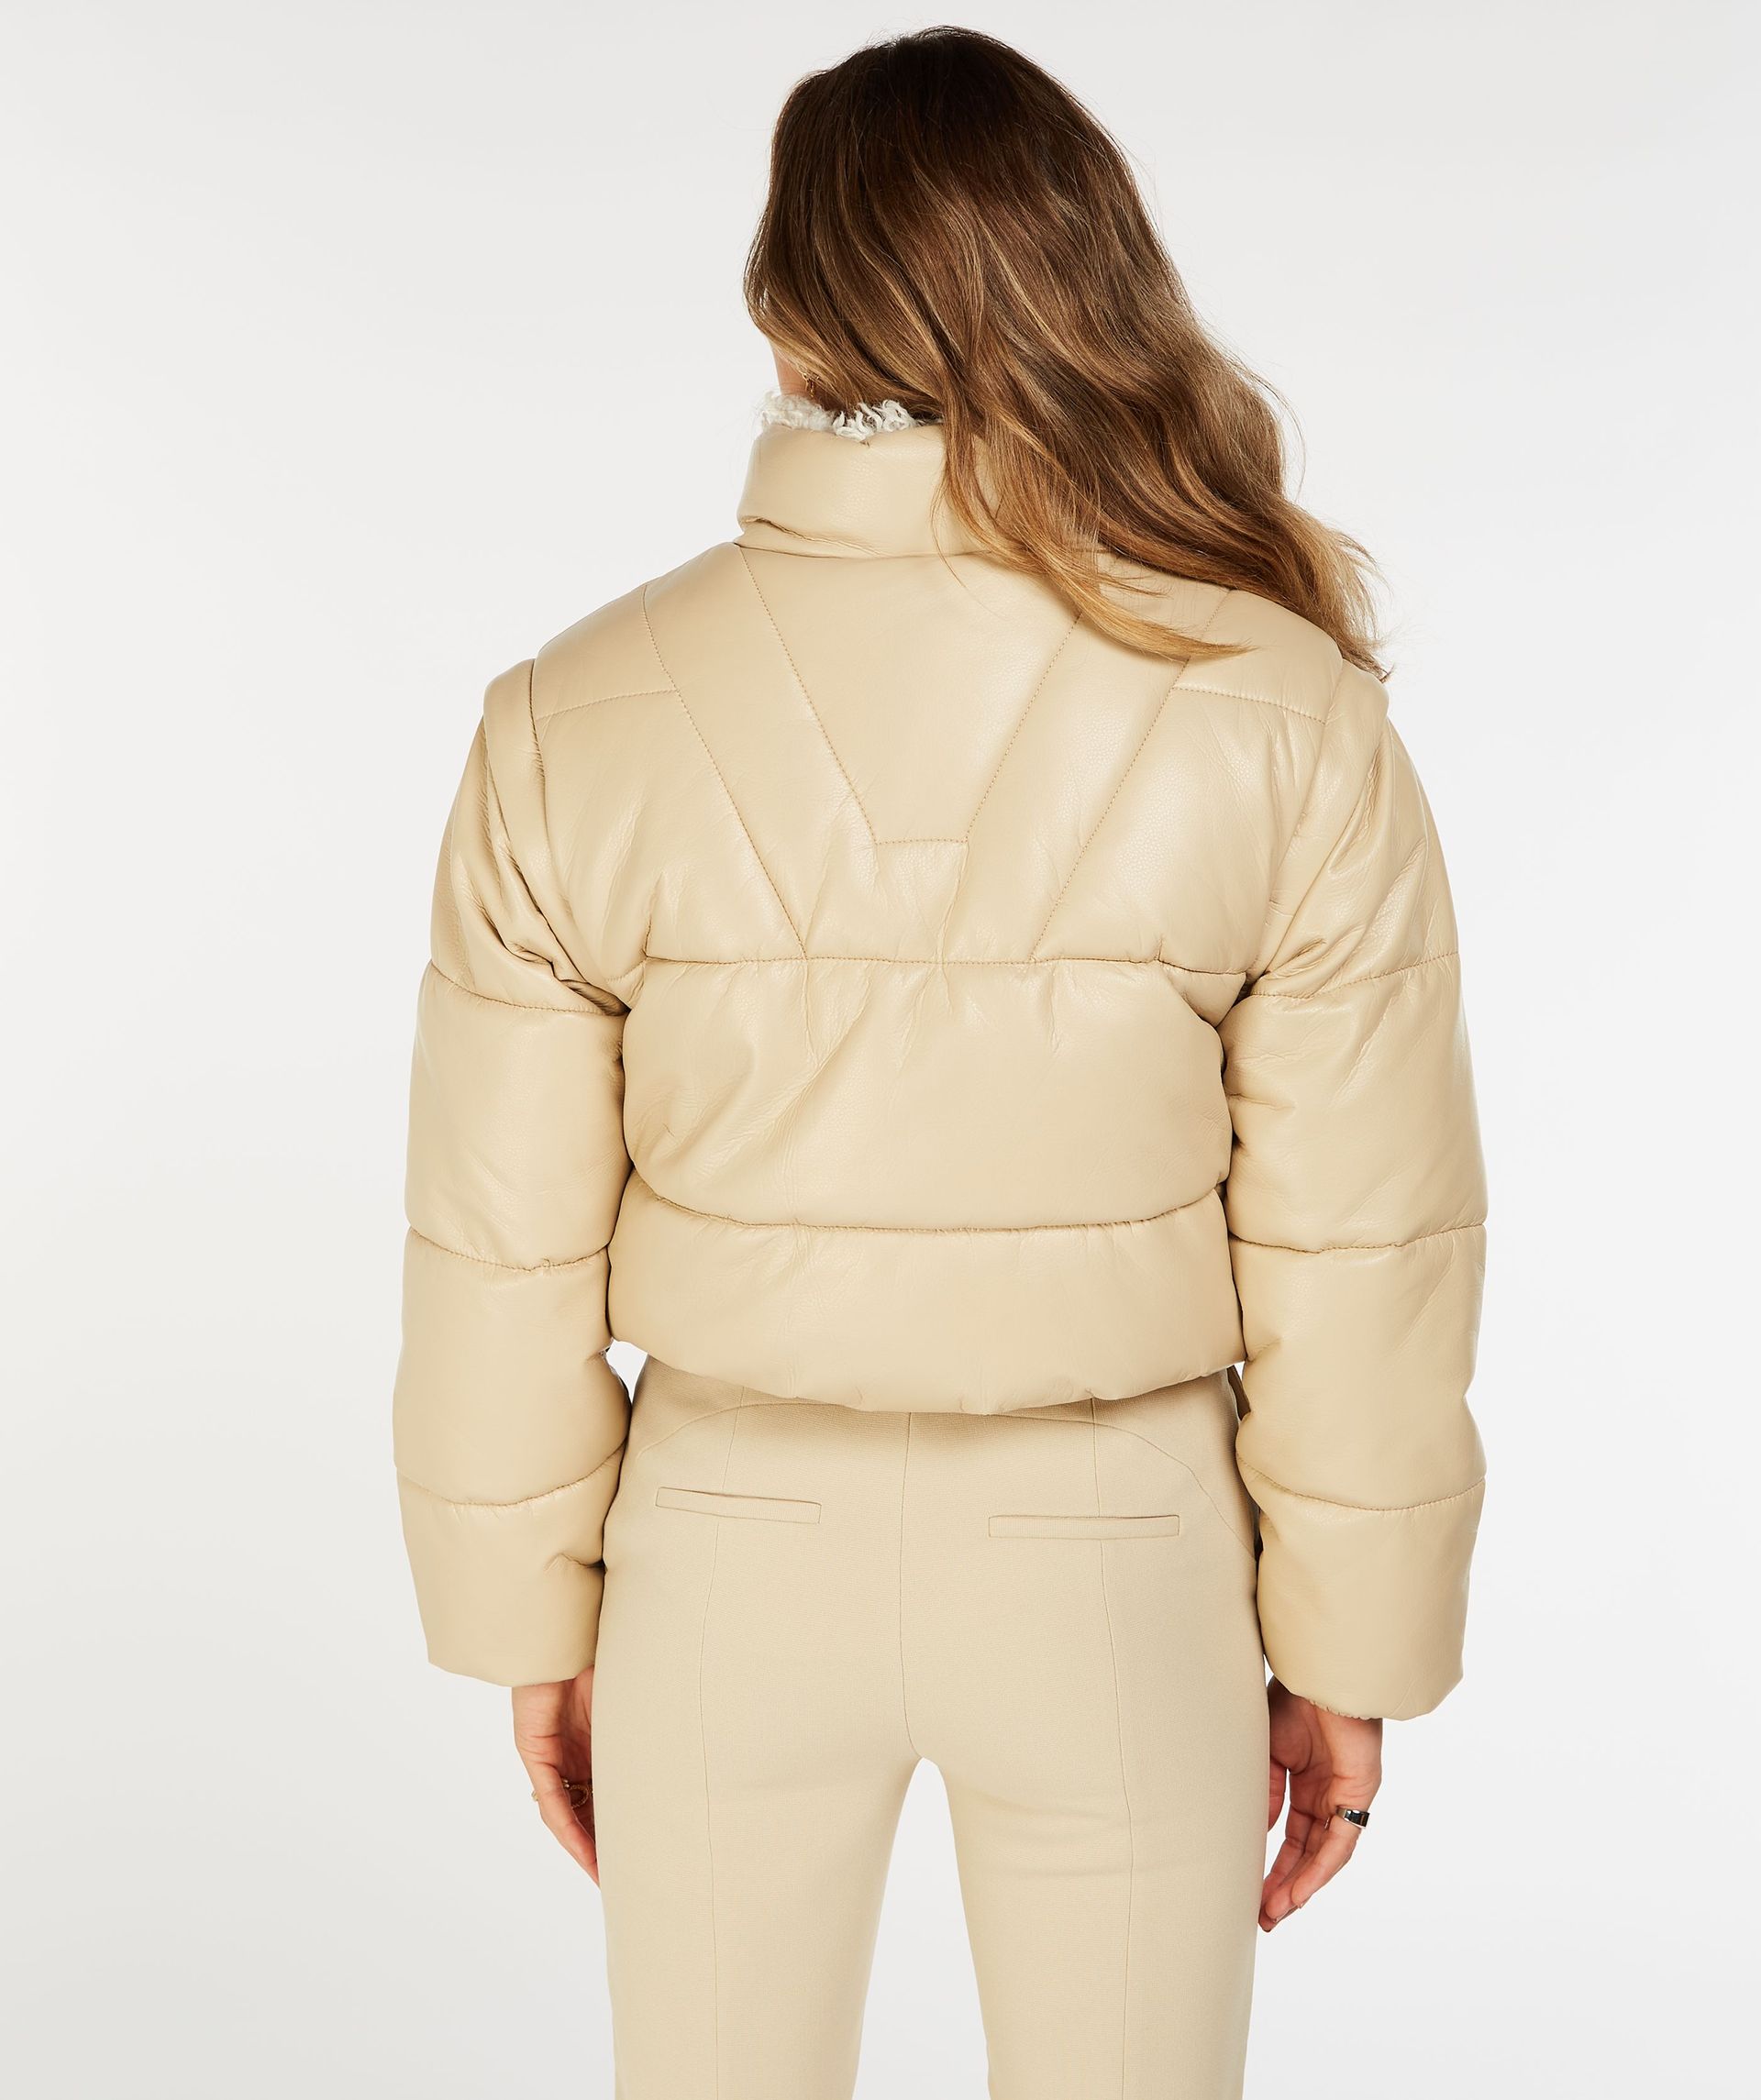 Ex Officio Adventure Wear Unisex Small Beige Jacket Coat Full Zip Long  Sleeve